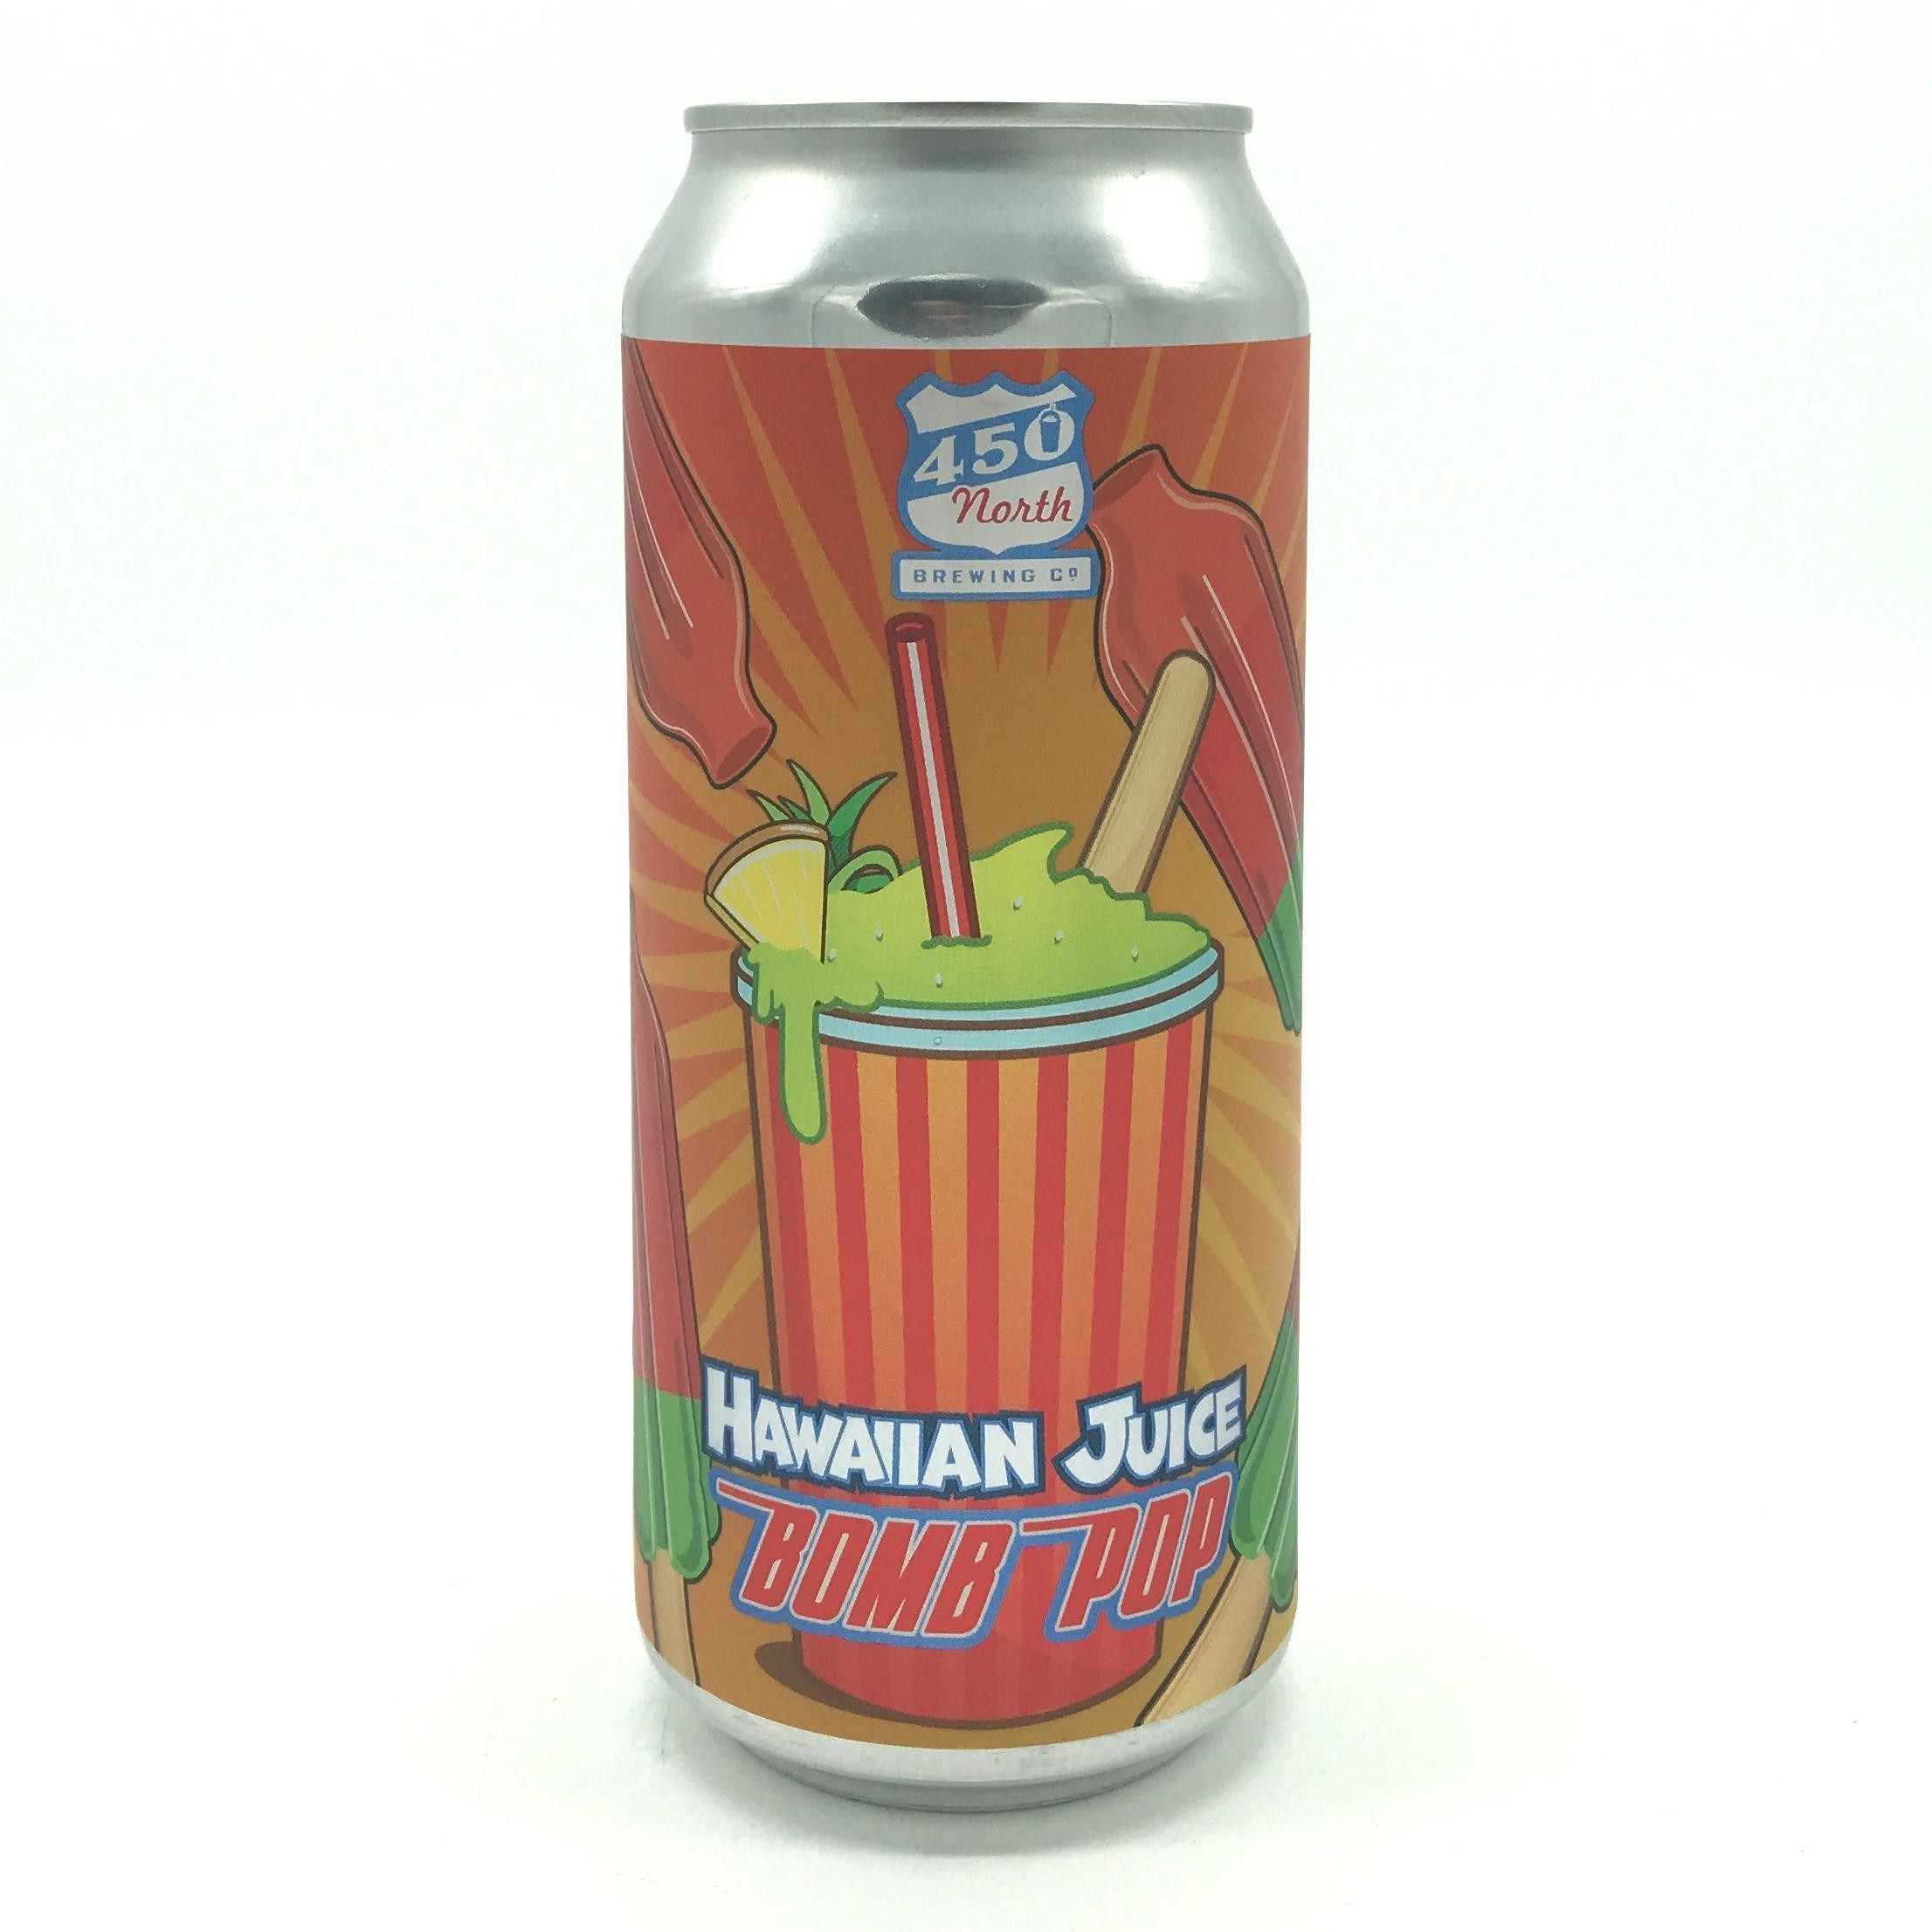 450 North - SLUSHY XL Bomb Pop: Hawaiian Juice